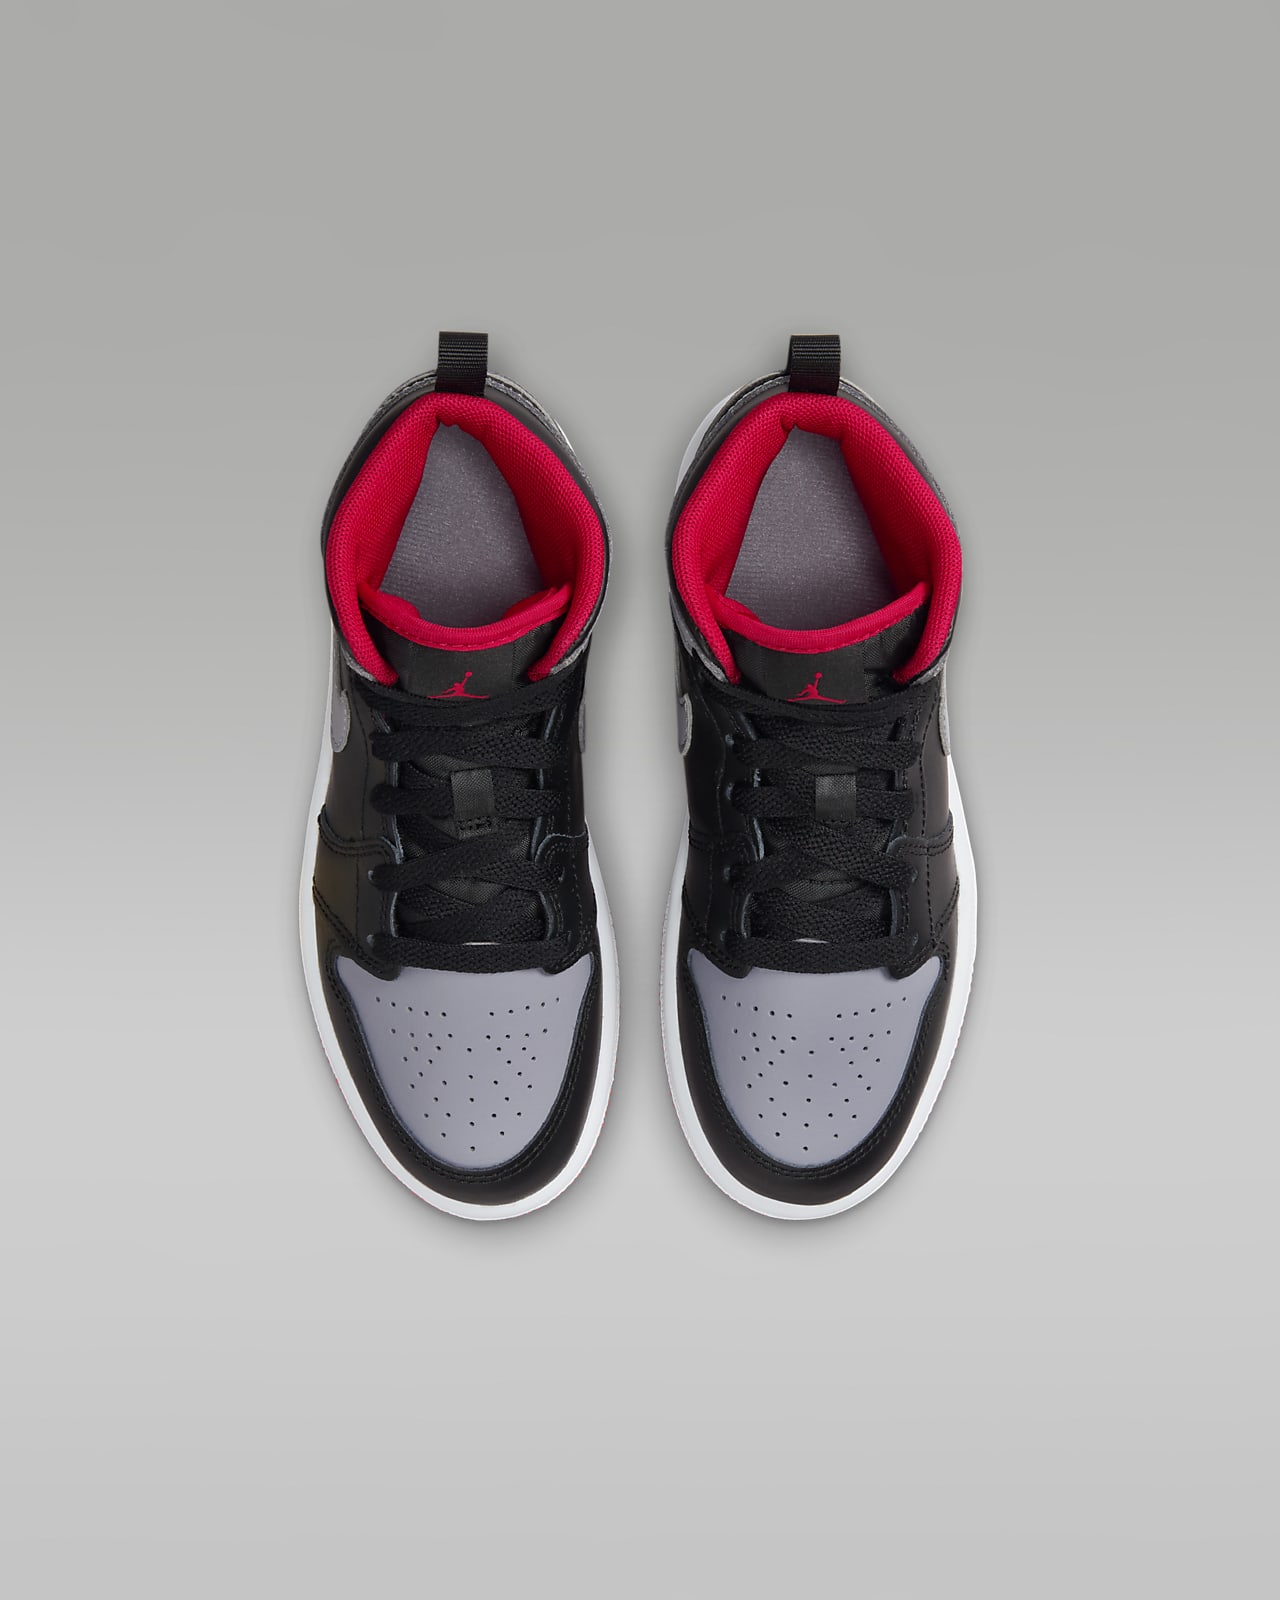 Chaussure Jordan 1 Mid SE pour enfant. Nike LU